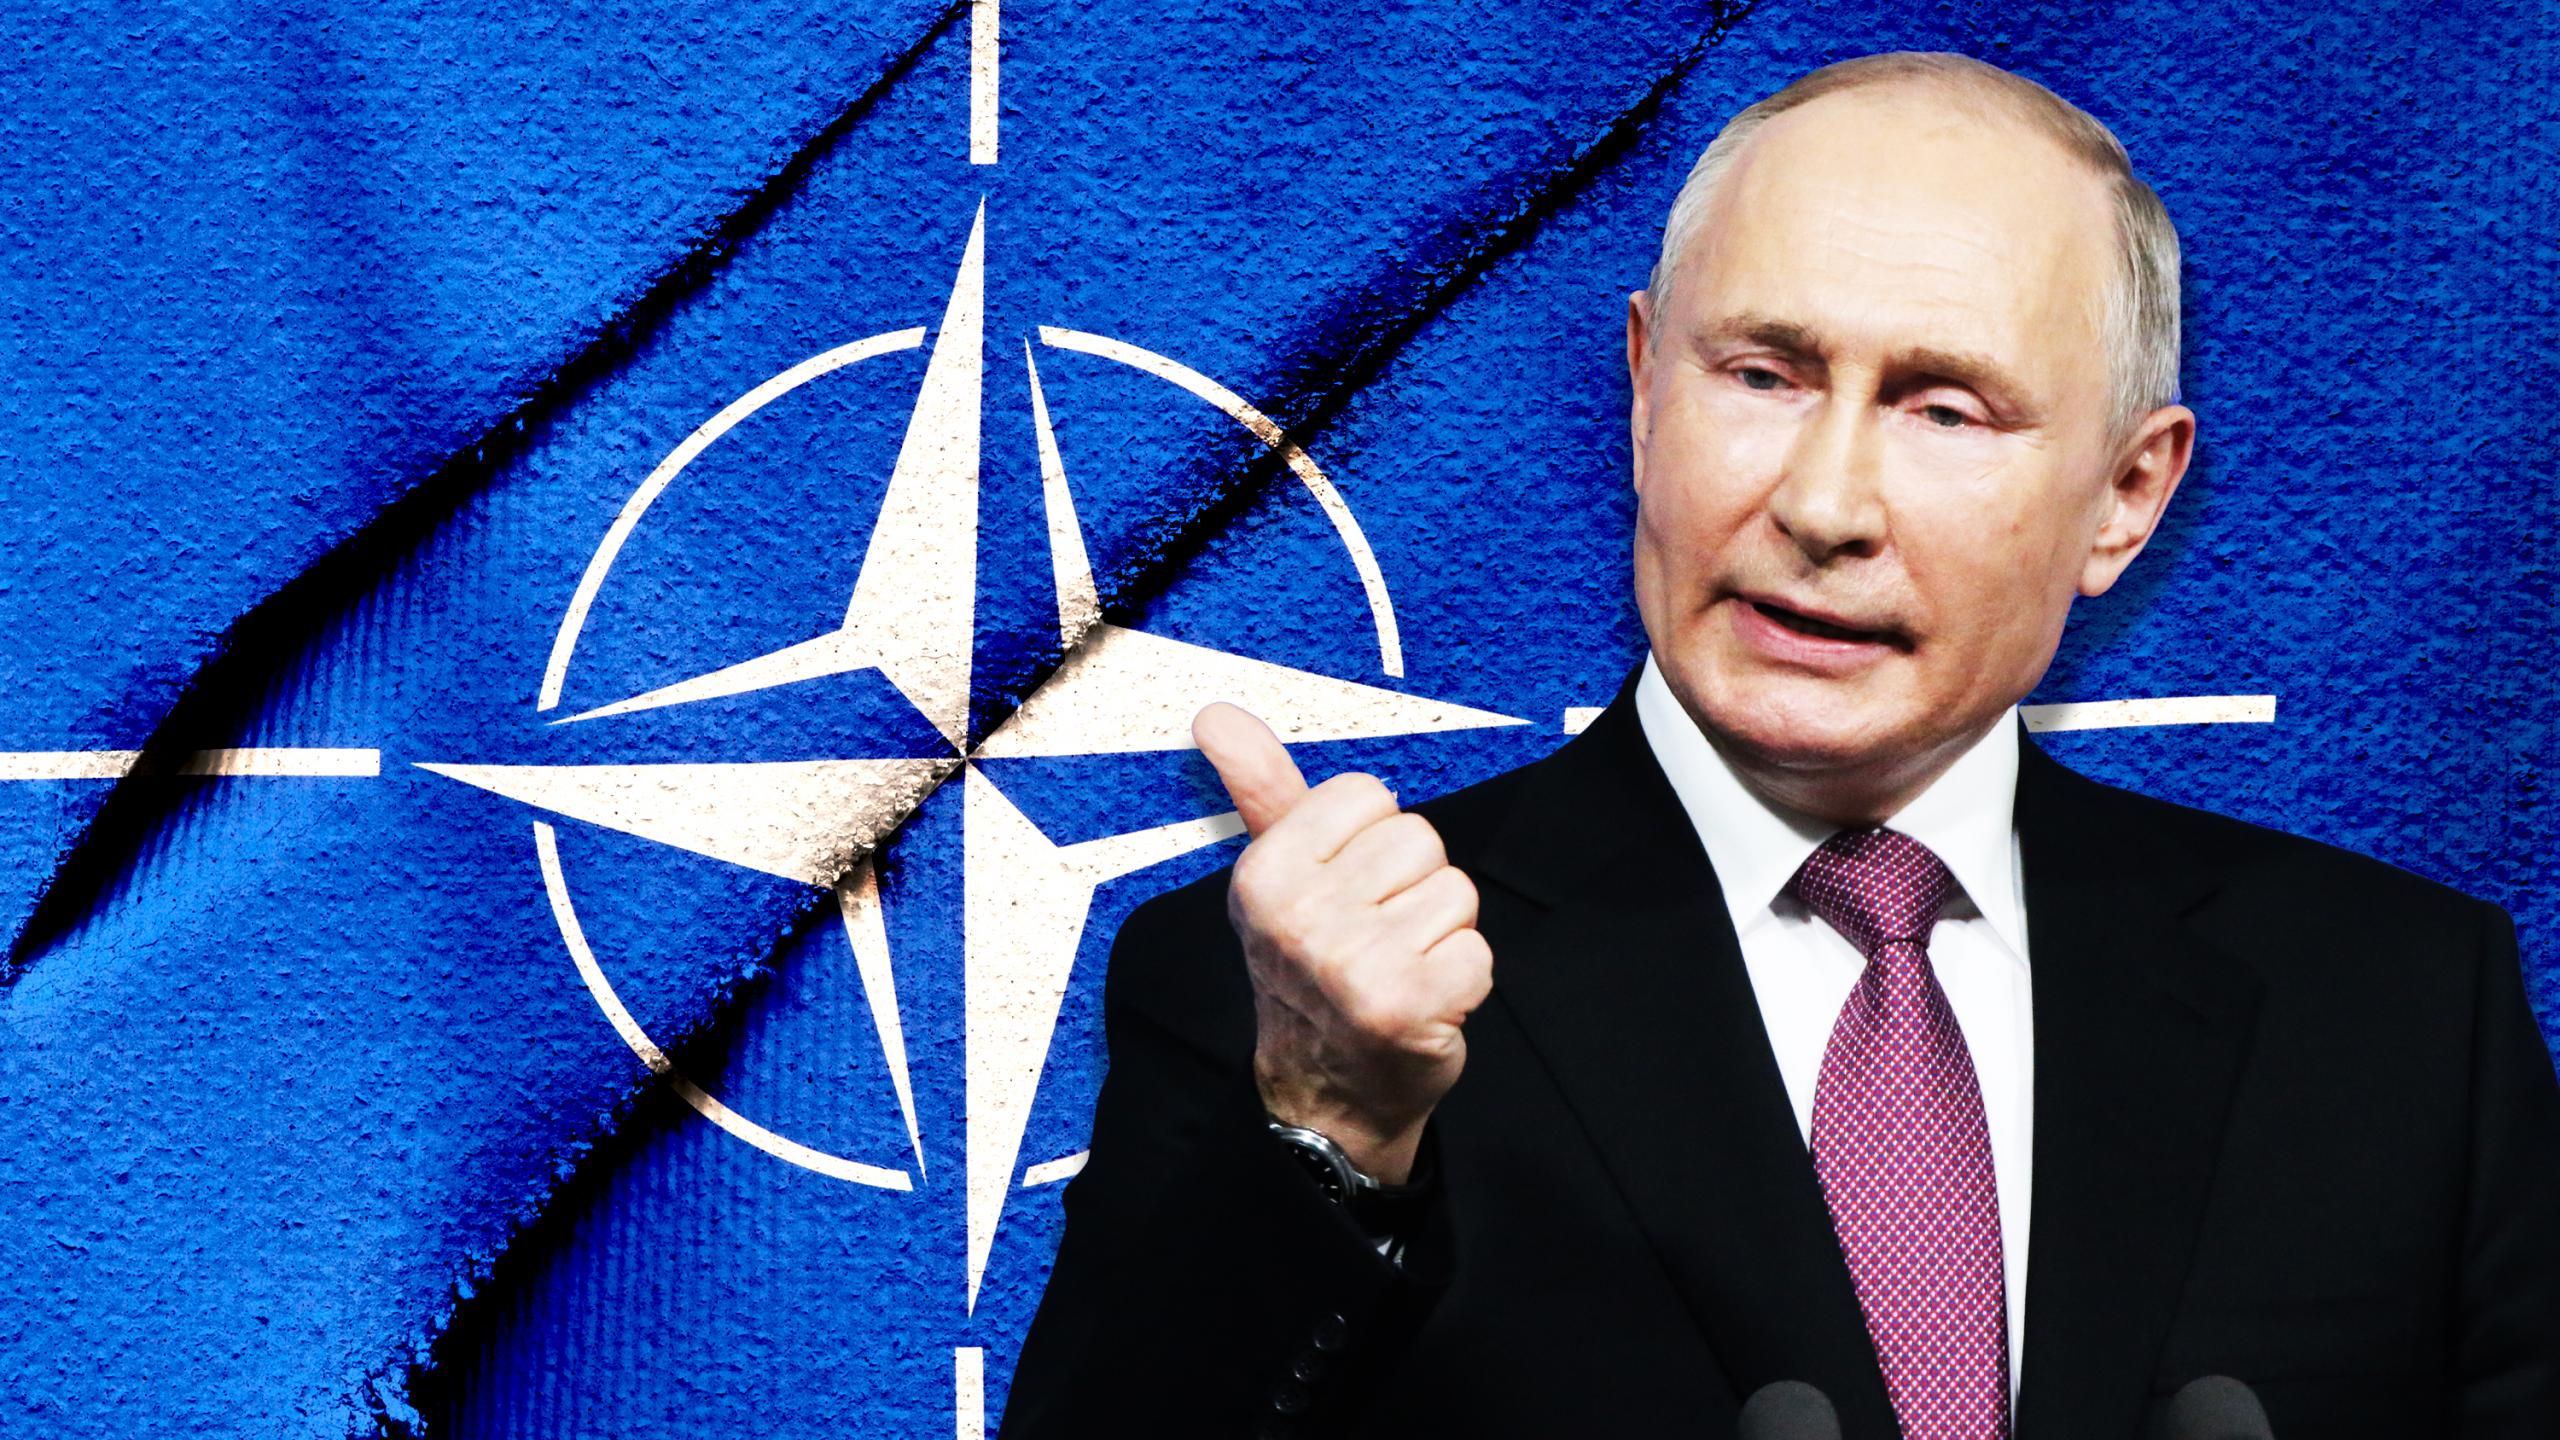 Putin proti zvezi NATO - a kako iz konflikta?